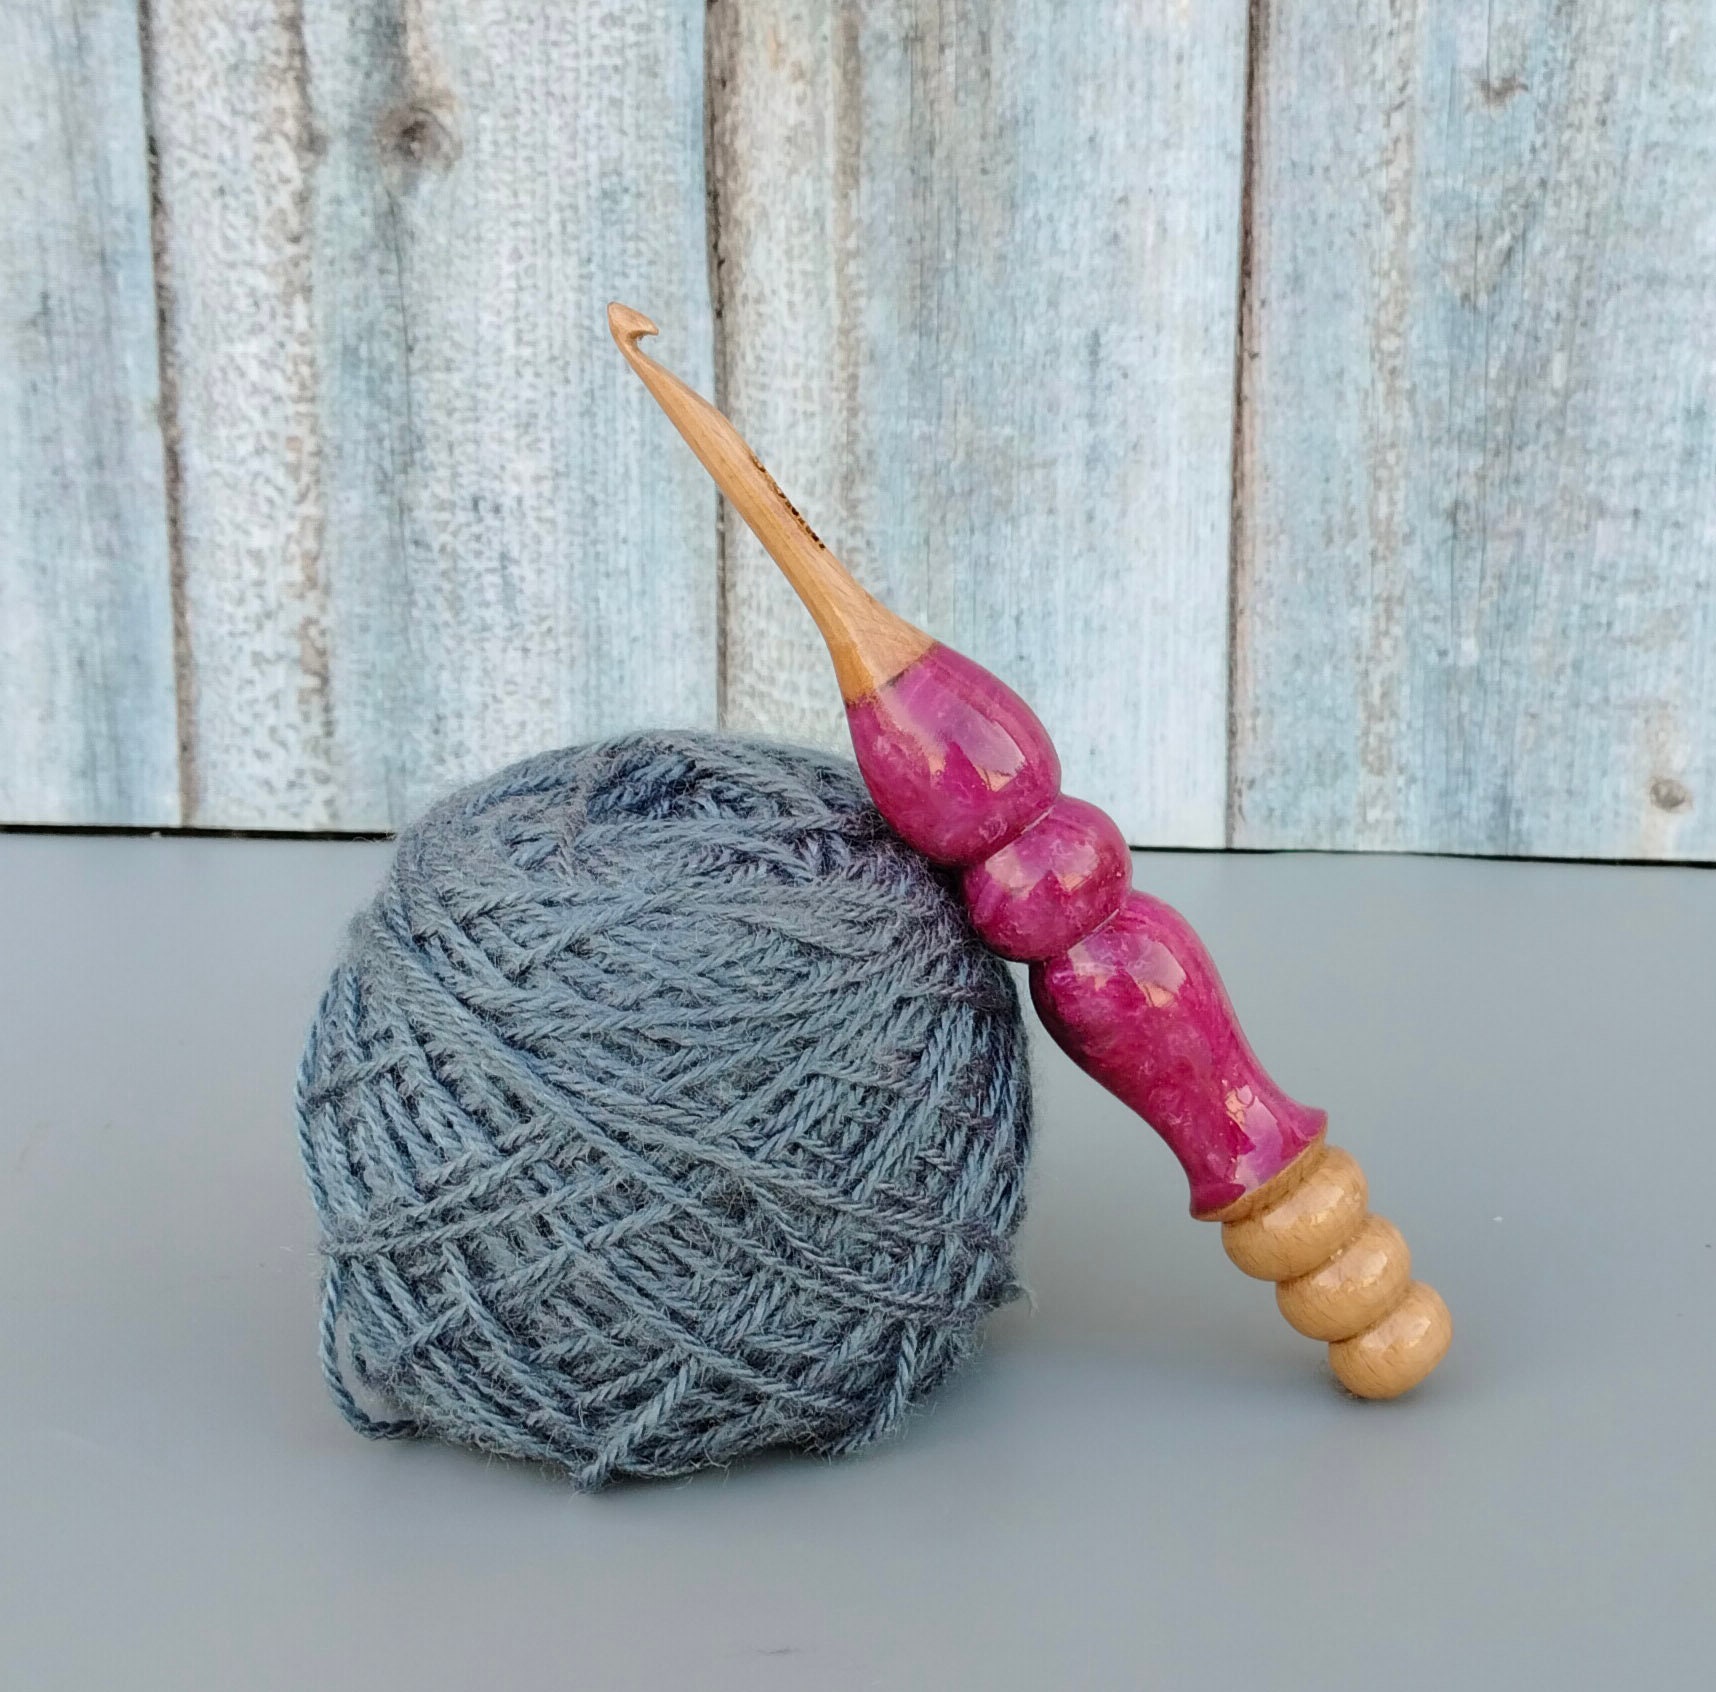 Prym wool crochet hook ergonomics 3 -15 mm crochet hook ergonomic